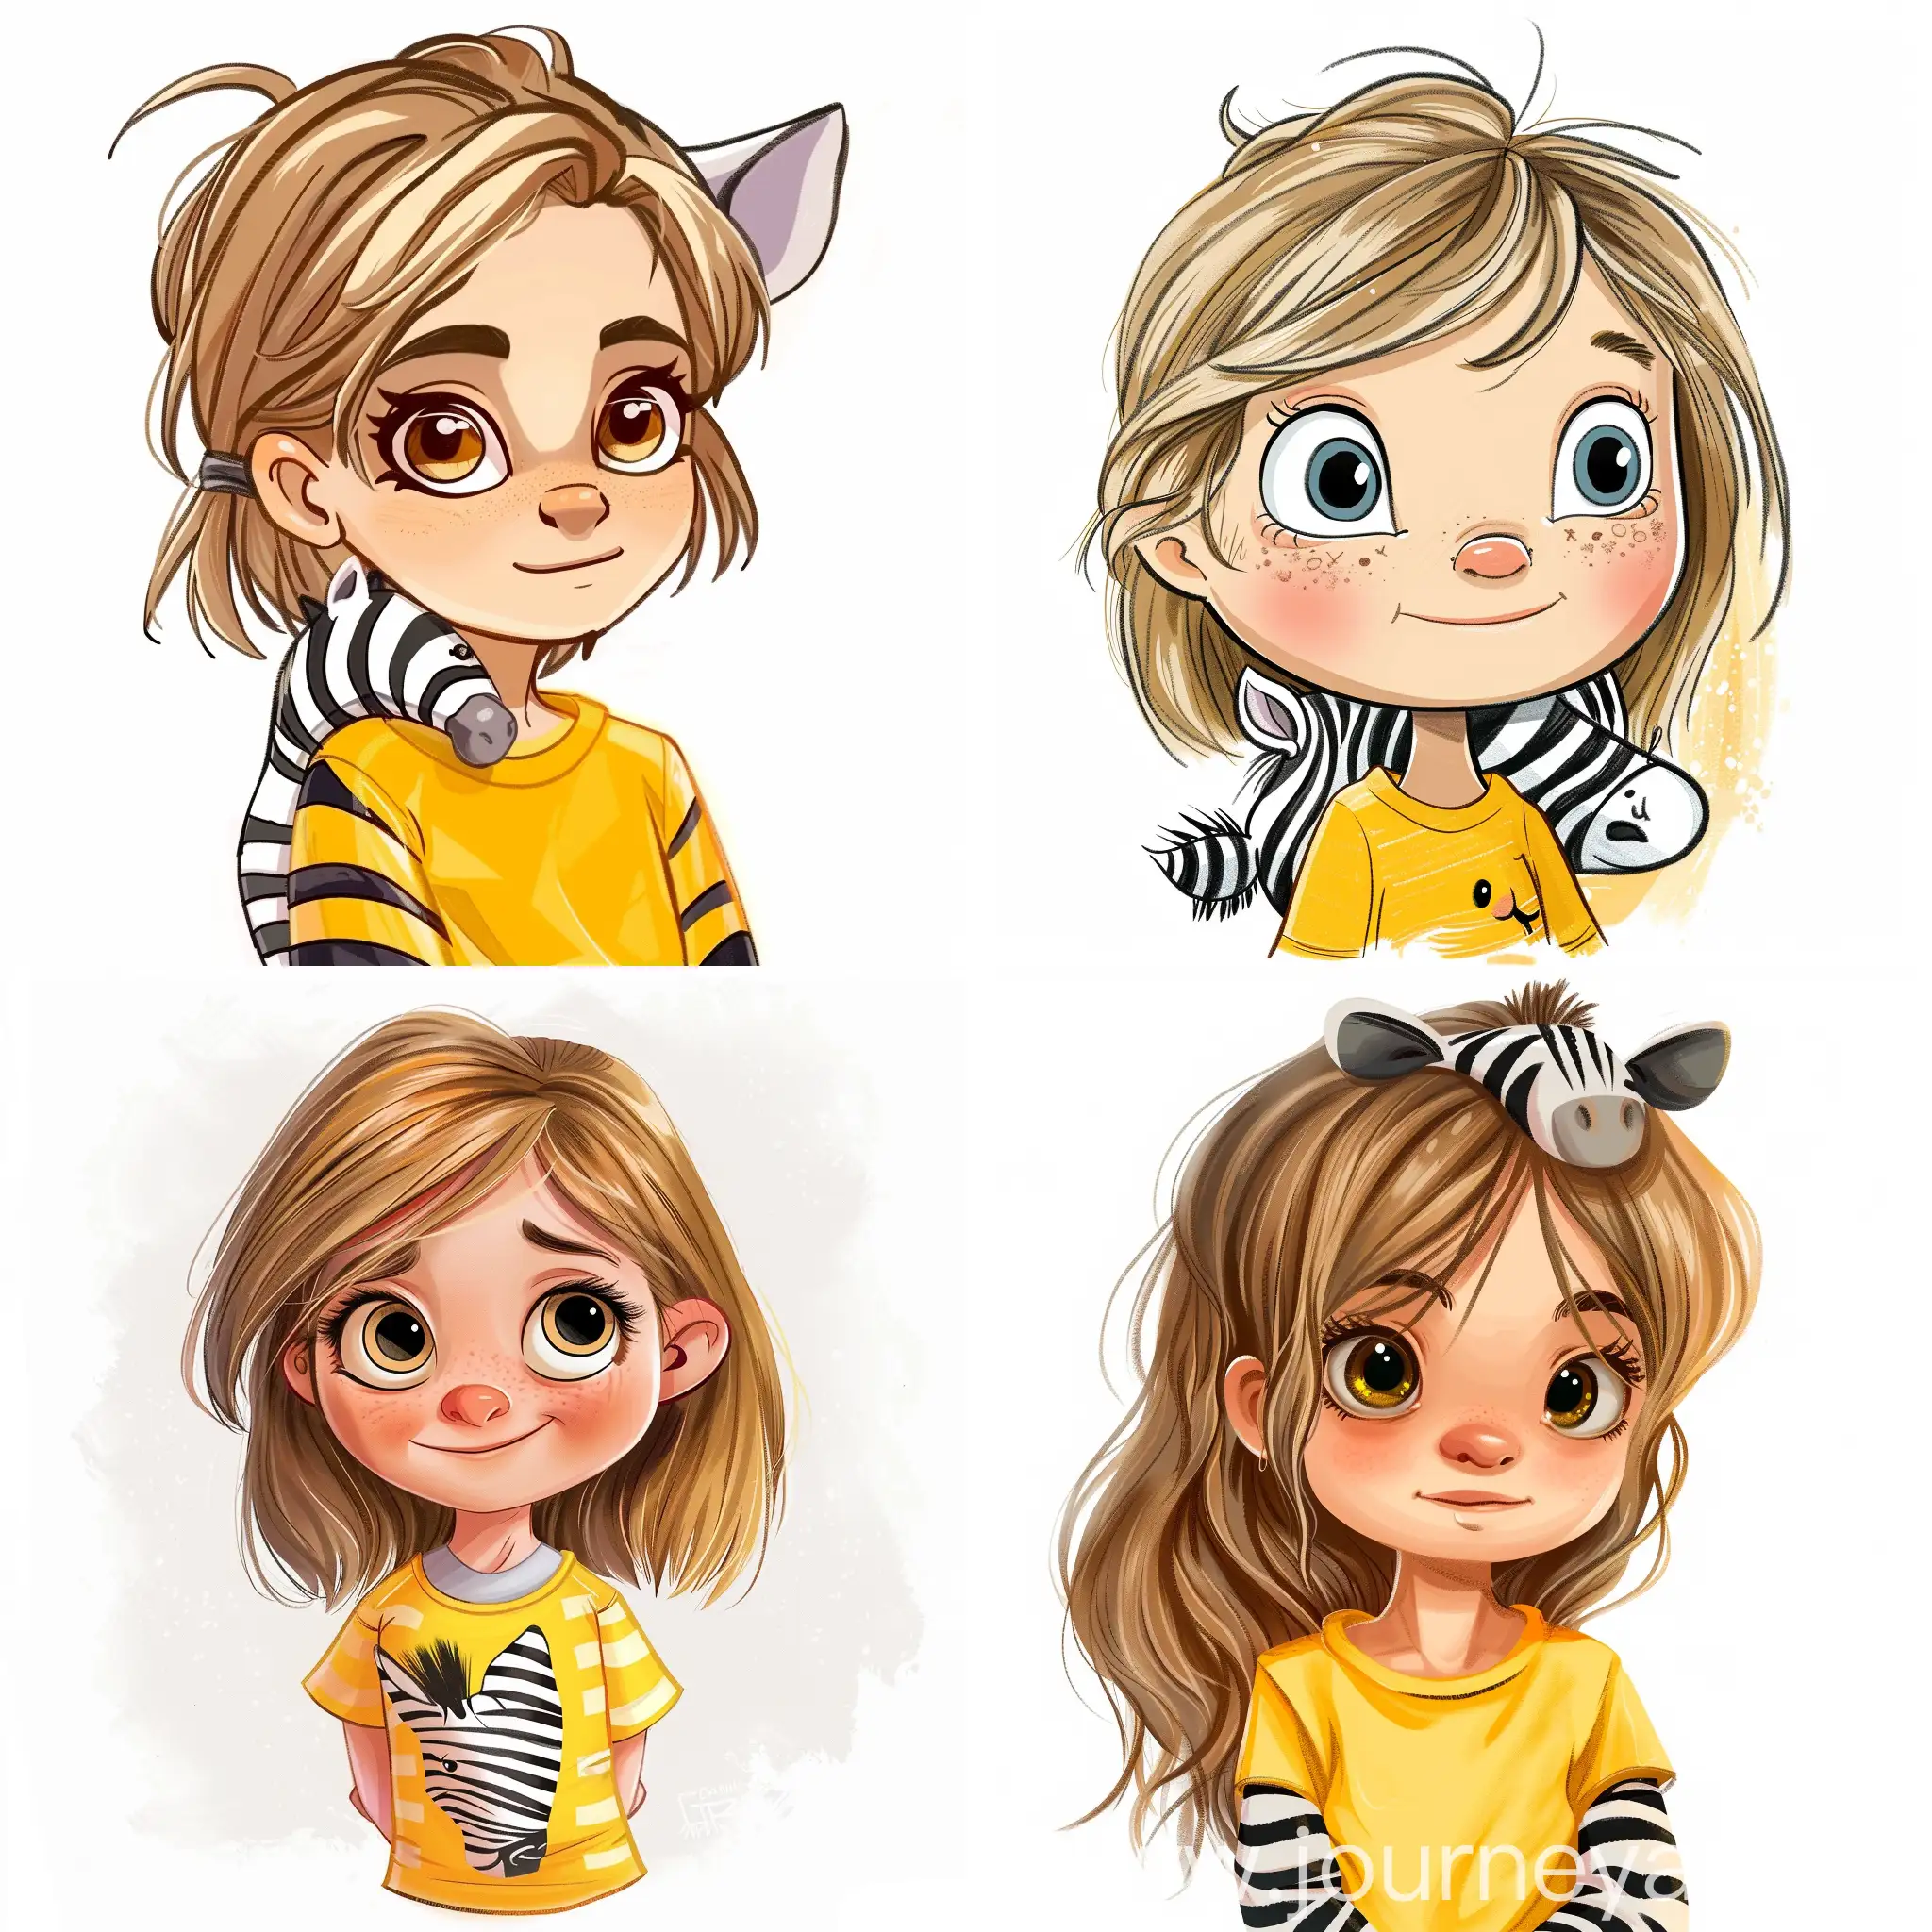 Cheerful-Blonde-Girl-in-Zebra-Costume